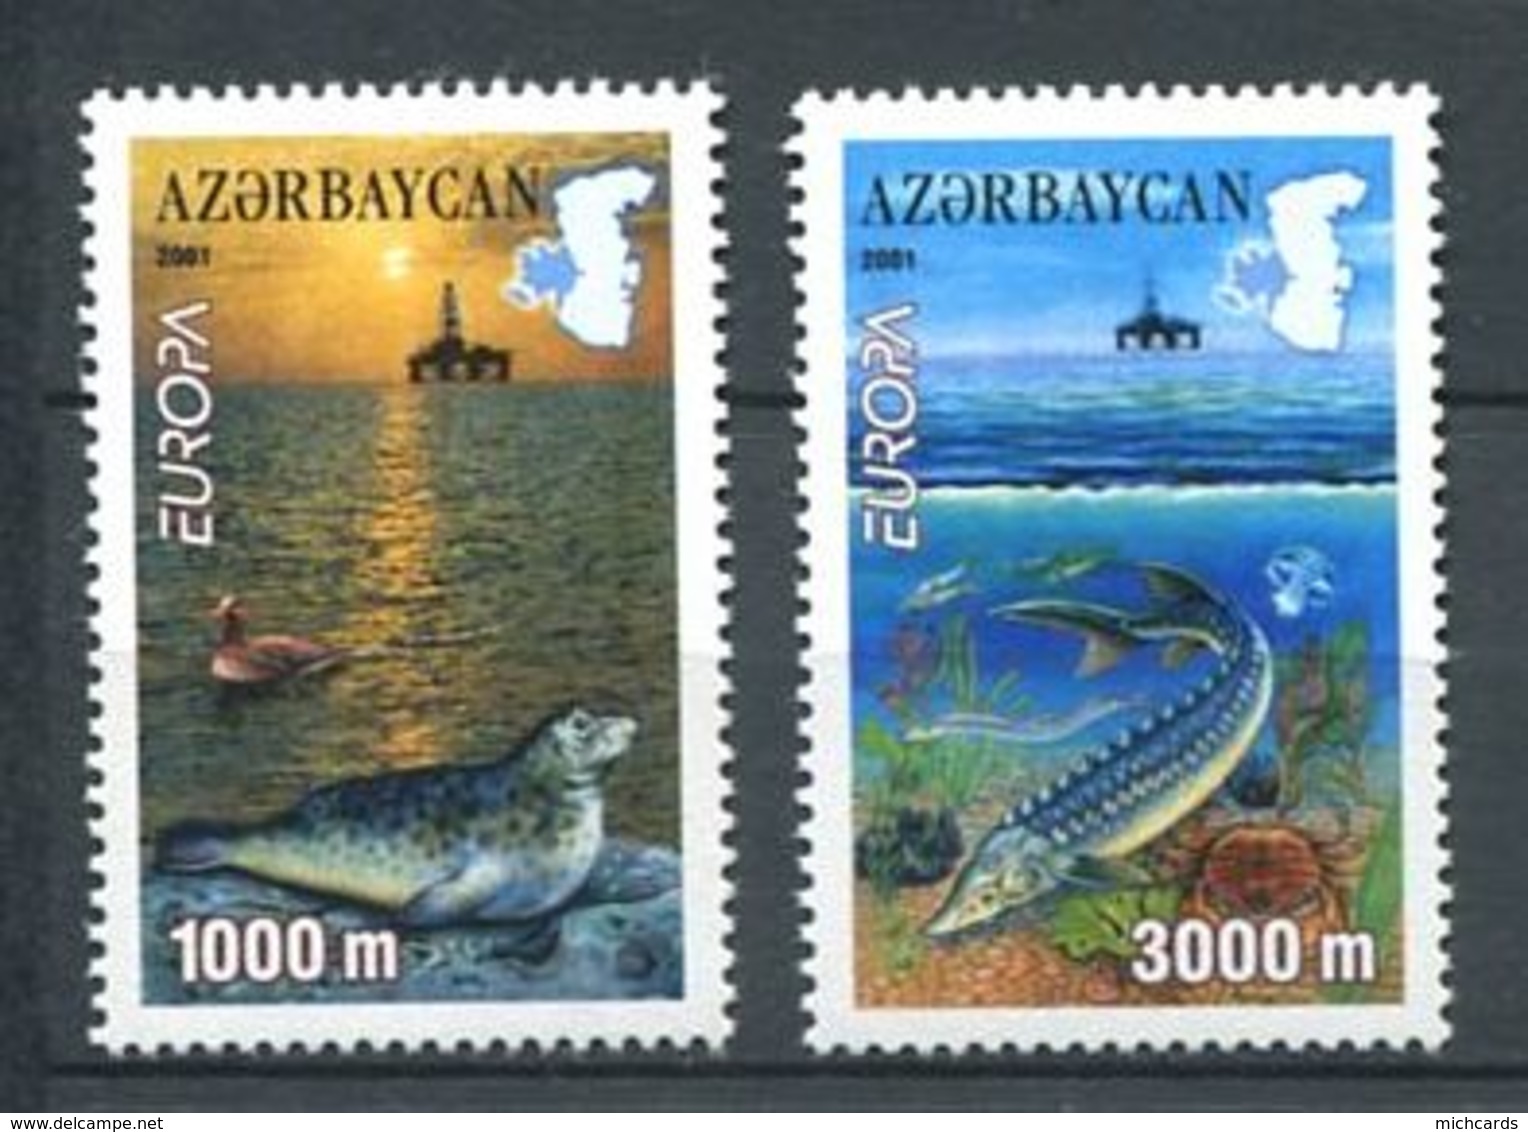 242 AZERBAIDJAN 2001 - Yvert 417 - Phoque Poisson - Neuf ** (MNH) Sans Trace De Charniere - Azerbaïdjan